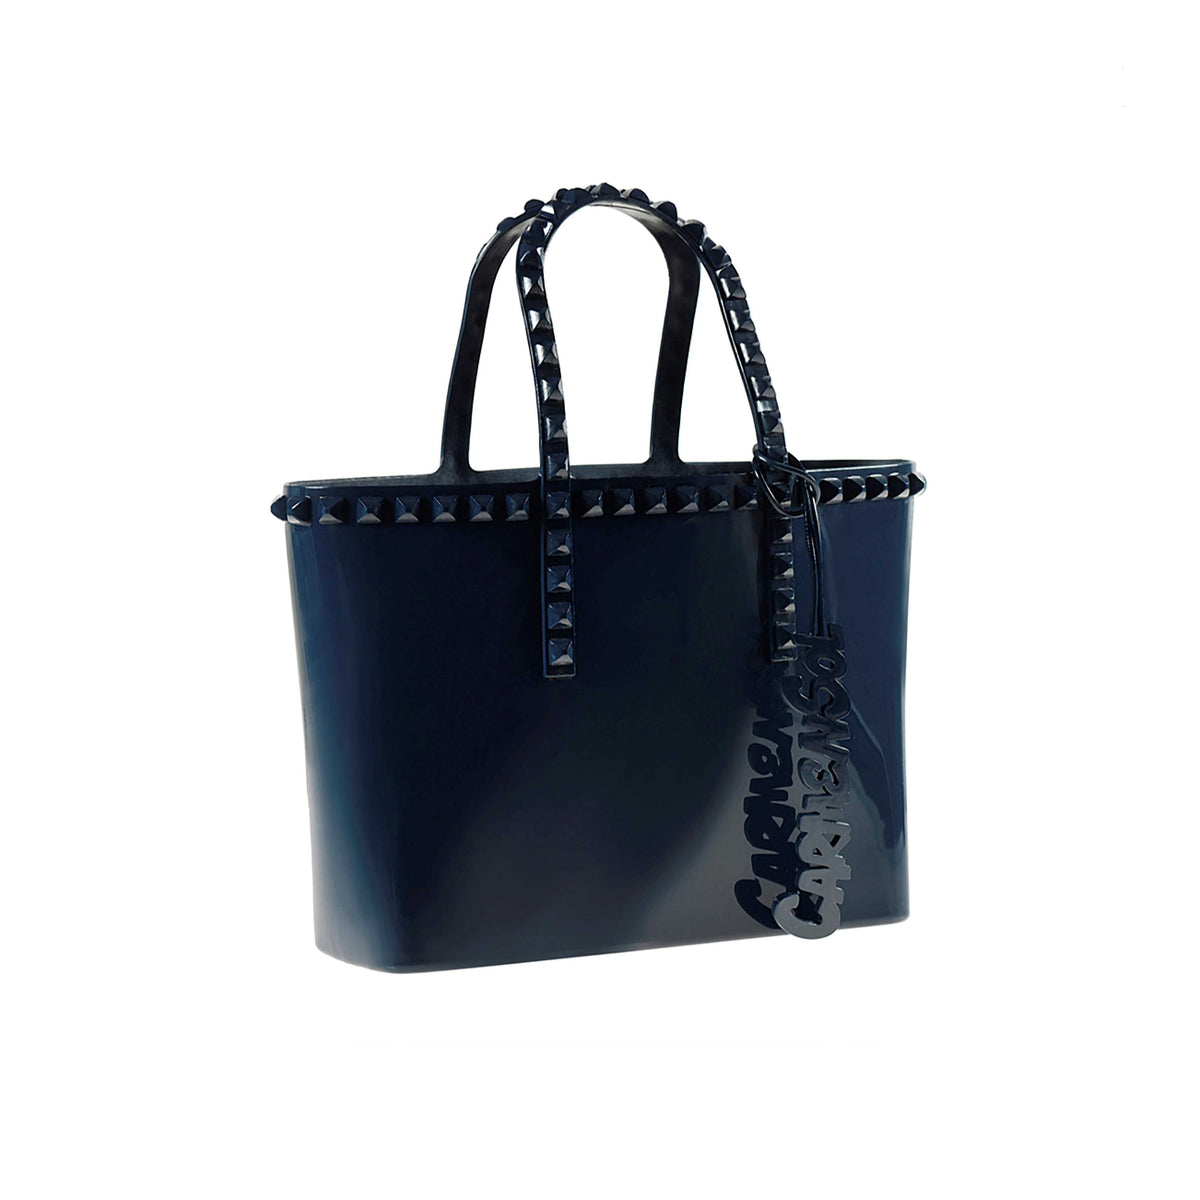 Navy blue beach purse with studded design 